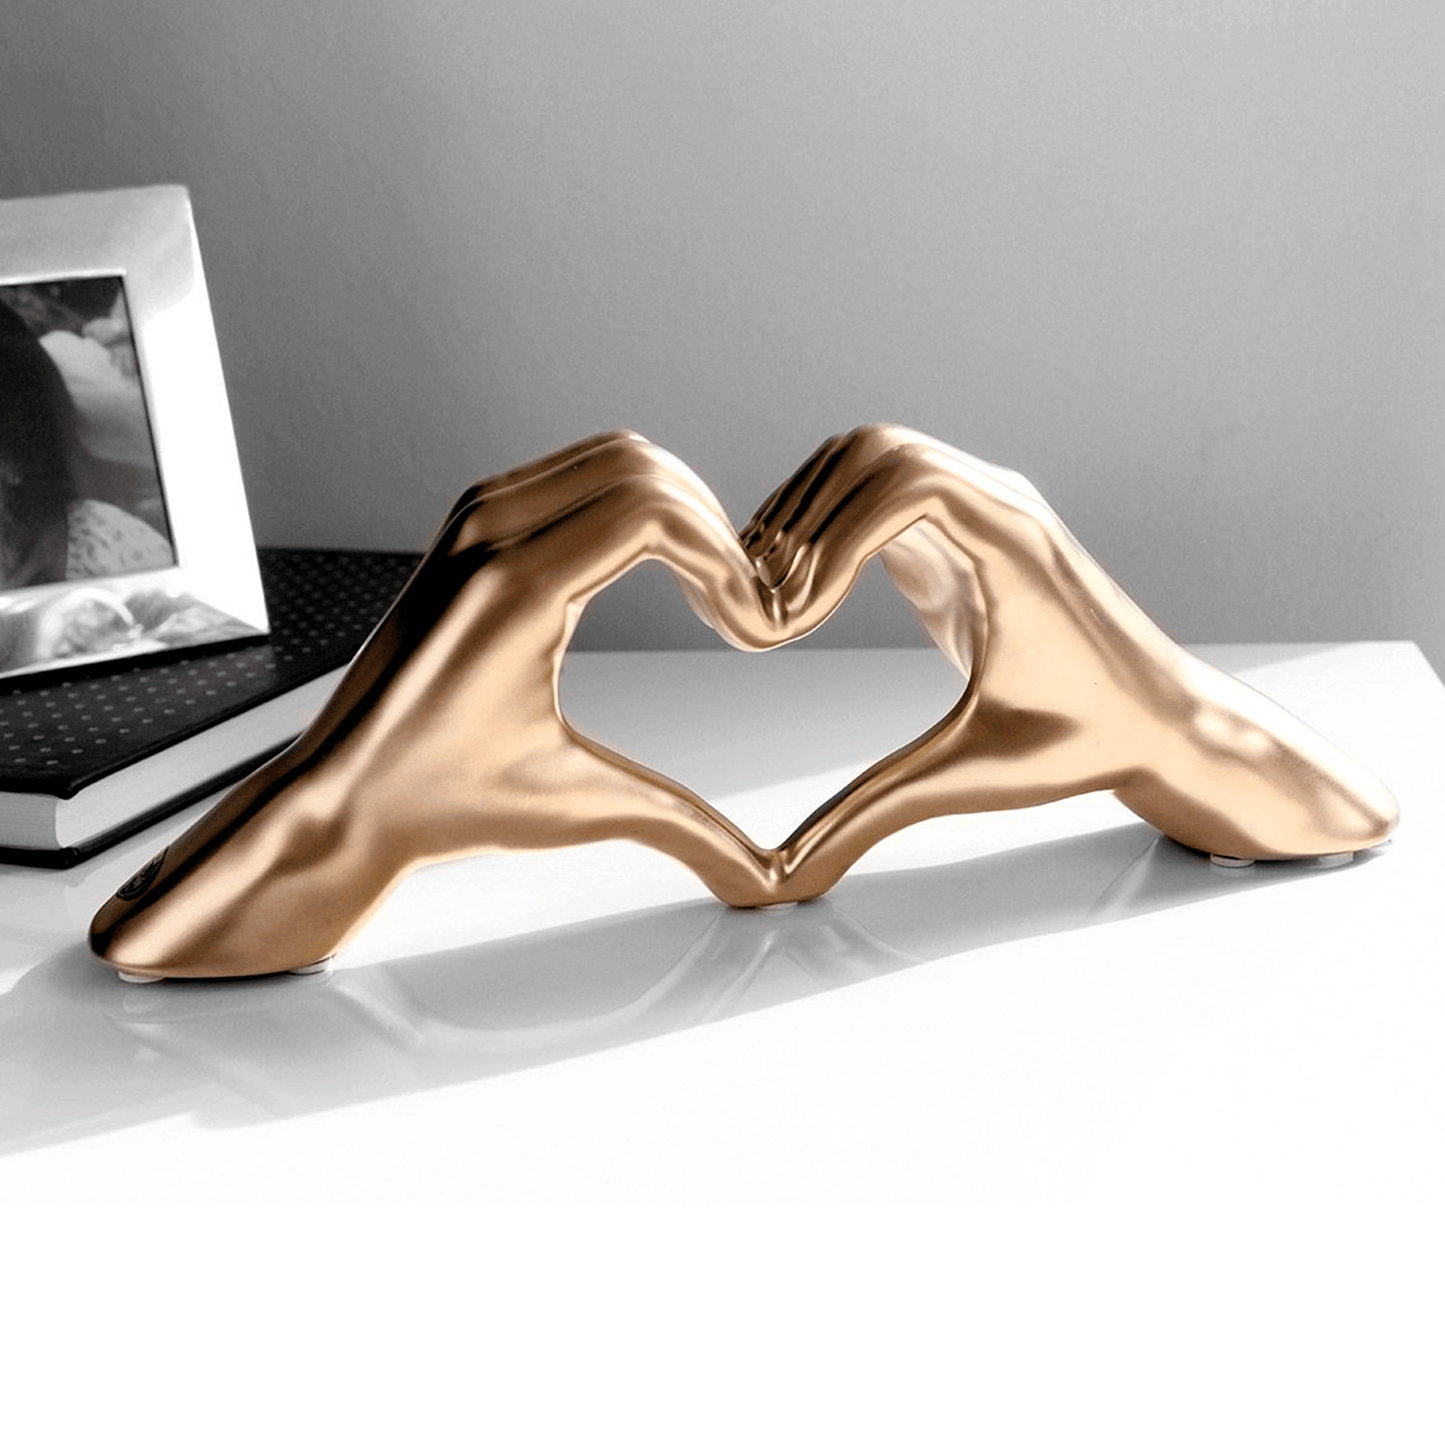 Heart Ceramic Hand Sculpture In Silver